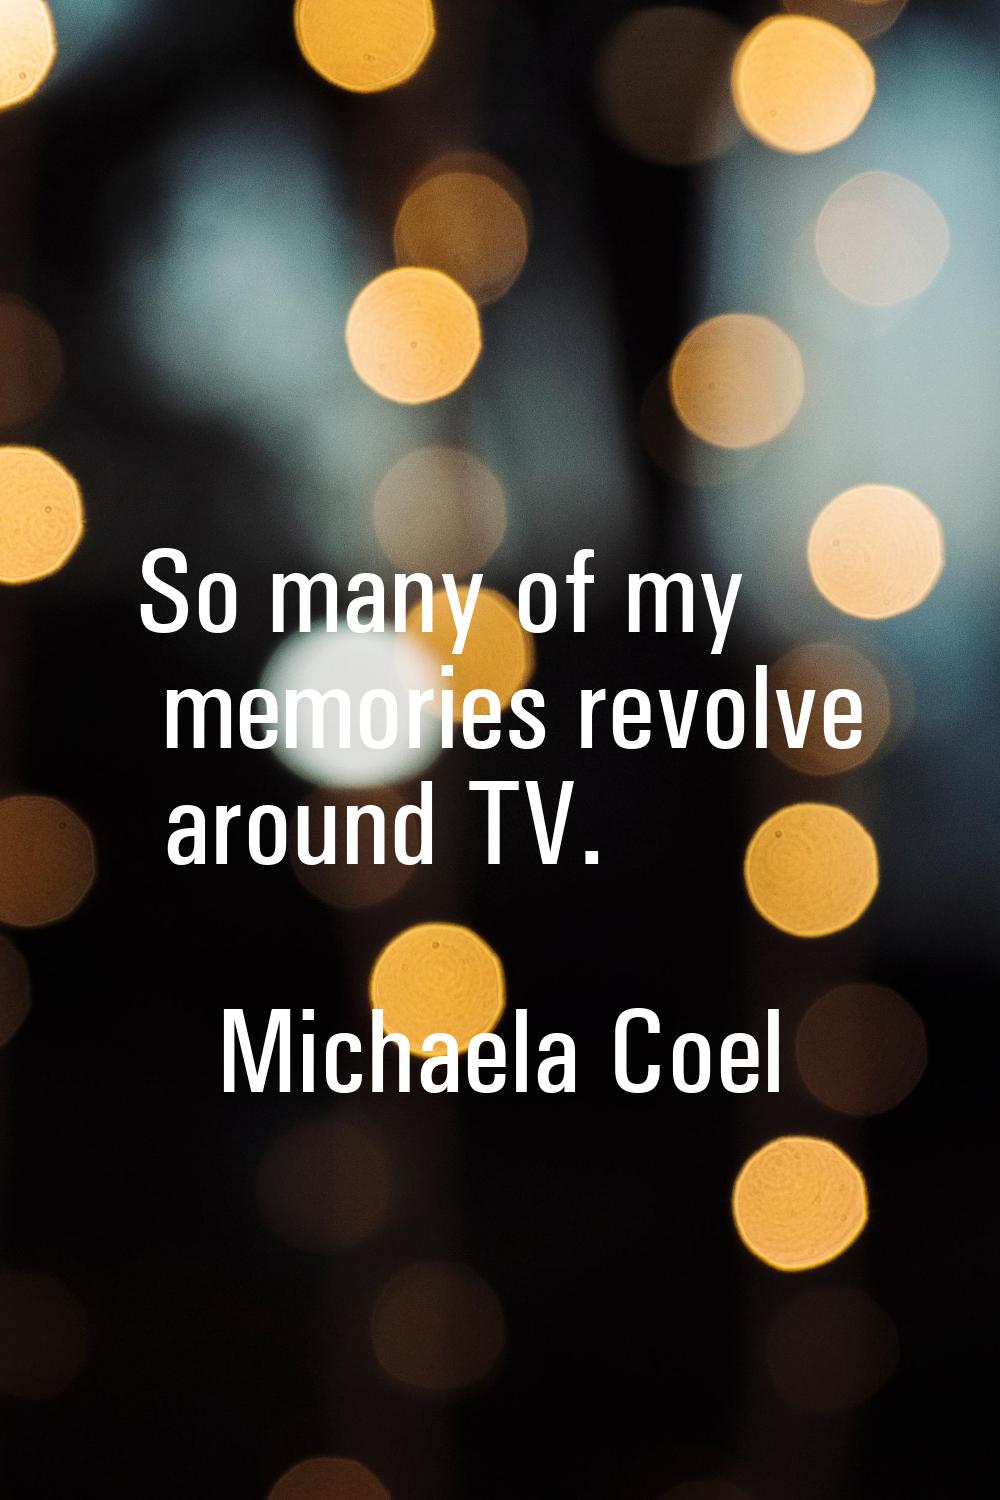 So many of my memories revolve around TV.